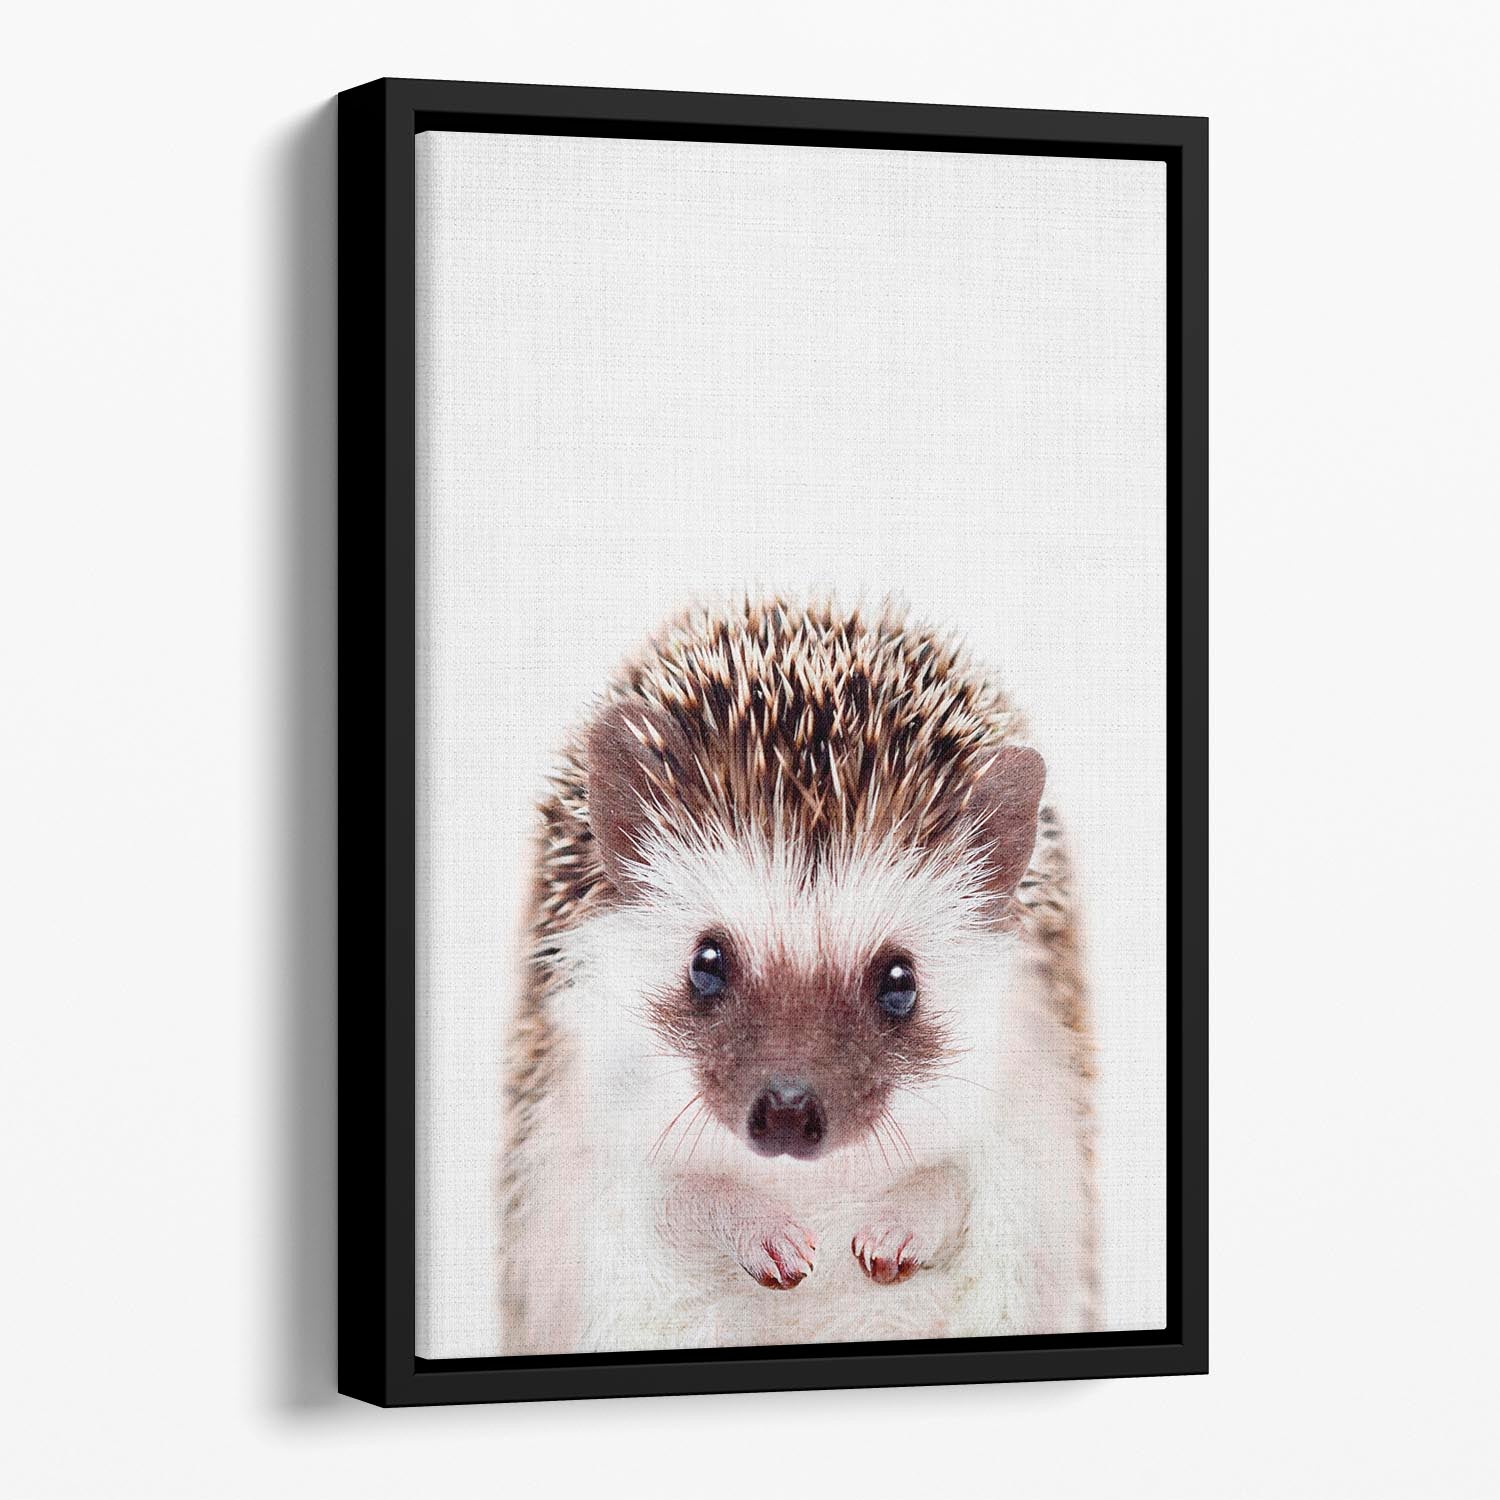 Peekaboo Hedgehog Floating Framed Canvas - 1x - 1